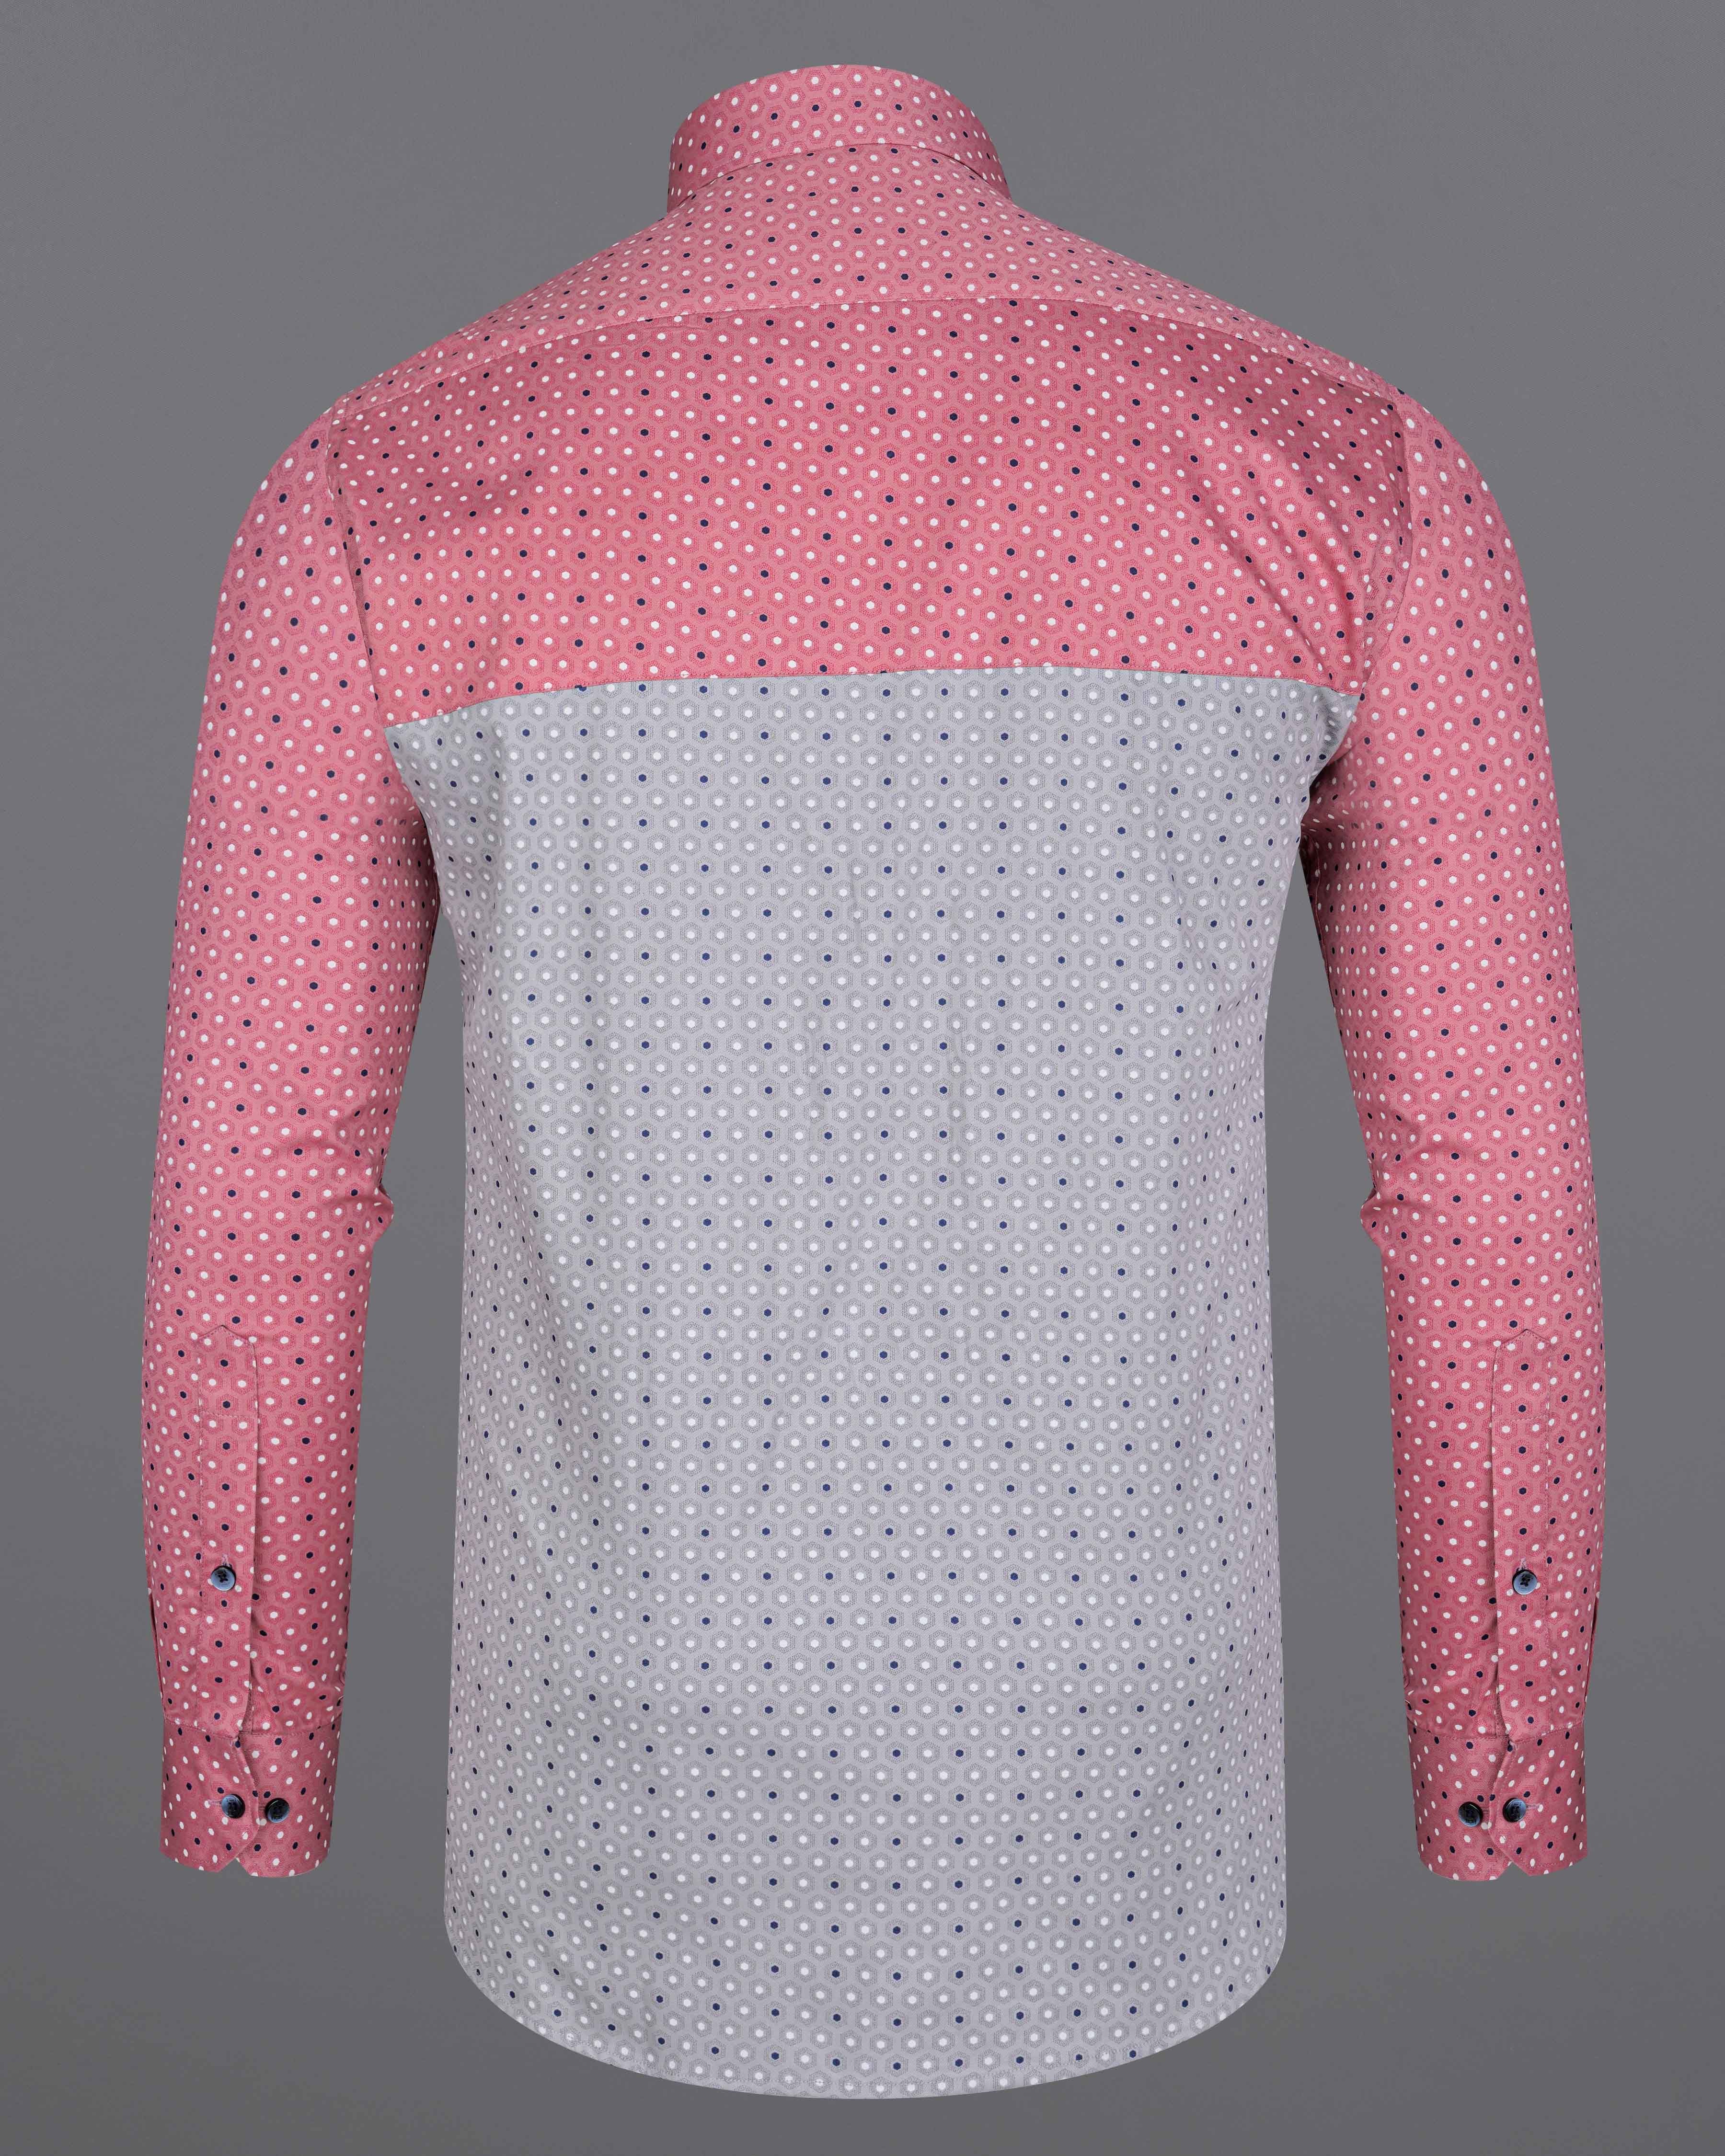 Pale Slate Grey and Deep Blush Pink Printed Twill Premium Cotton Designer Shirt 8175-BLE-P134-38, 8175-BLE-P134-H-38, 8175-BLE-P134-39, 8175-BLE-P134-H-39, 8175-BLE-P134-40, 8175-BLE-P134-H-40, 8175-BLE-P134-42, 8175-BLE-P134-H-42, 8175-BLE-P134-44, 8175-BLE-P134-H-44, 8175-BLE-P134-46, 8175-BLE-P134-H-46, 8175-BLE-P134-48, 8175-BLE-P134-H-48, 8175-BLE-P134-50, 8175-BLE-P134-H-50, 8175-BLE-P134-52, 8175-BLE-P134-H-52